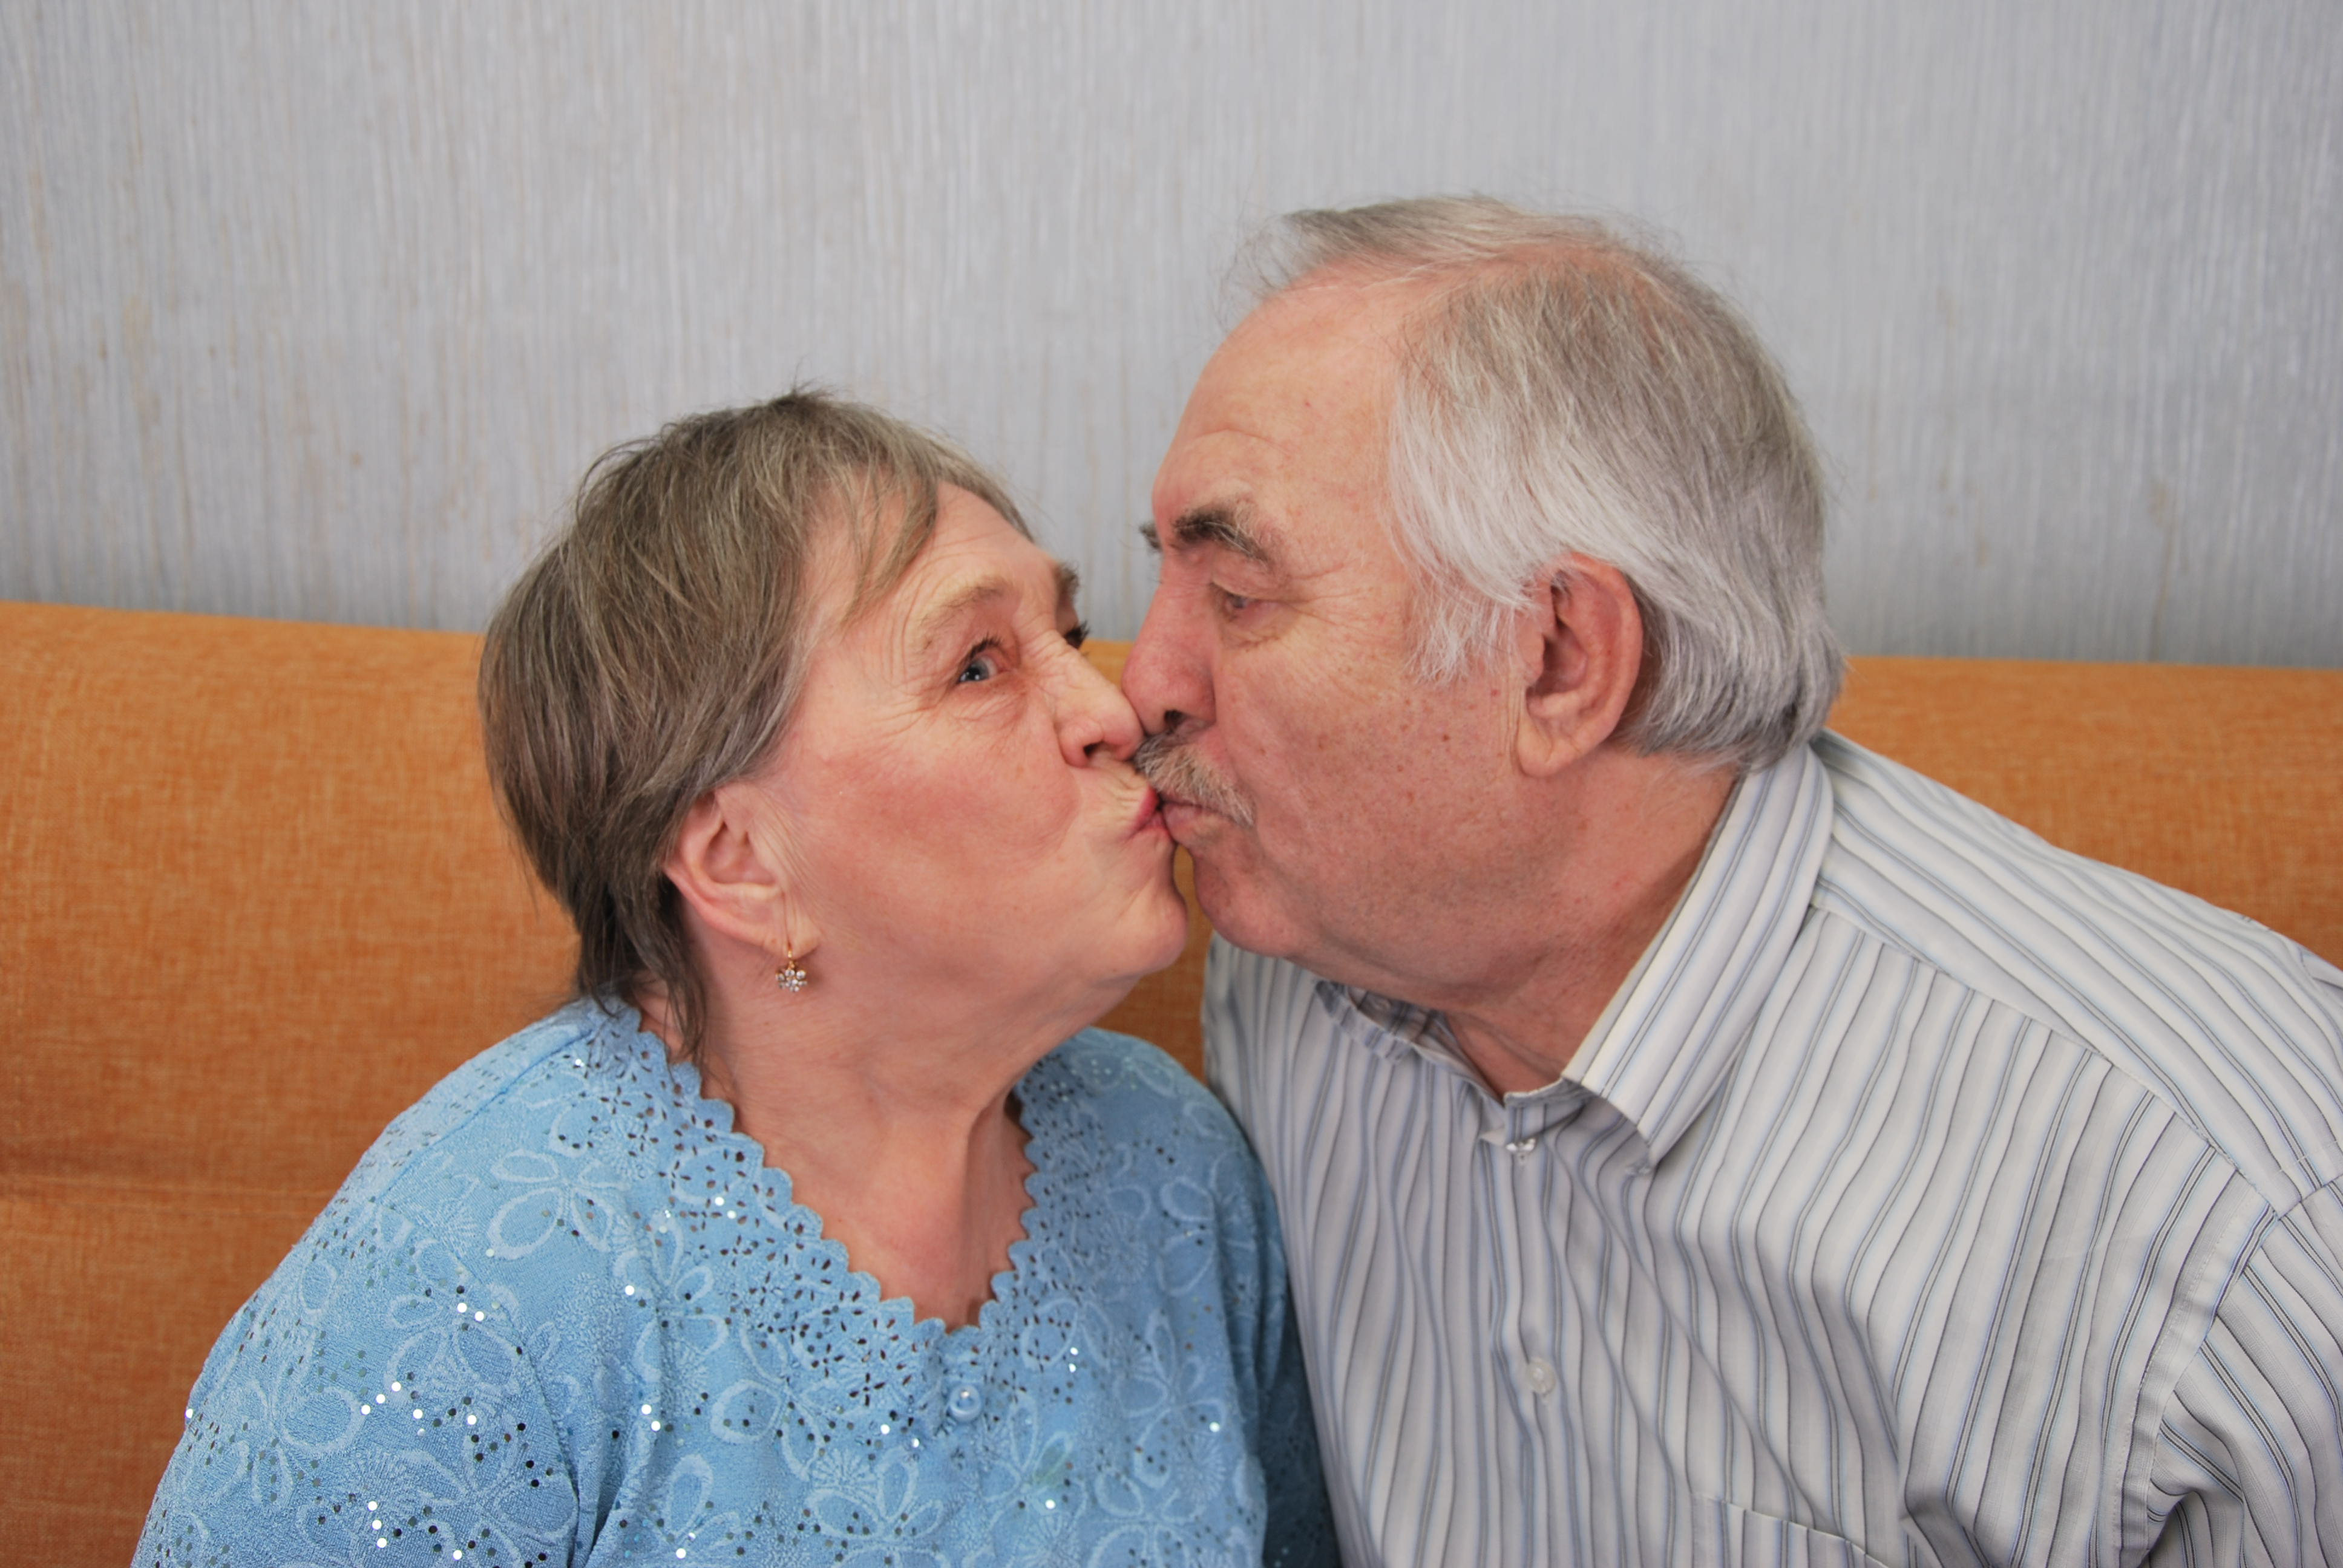 Поцелую дедушку. Бабушка и дедушка целуются. Поцелуй Деда. Деды целуются. Девочка, дедушка, сосаться..